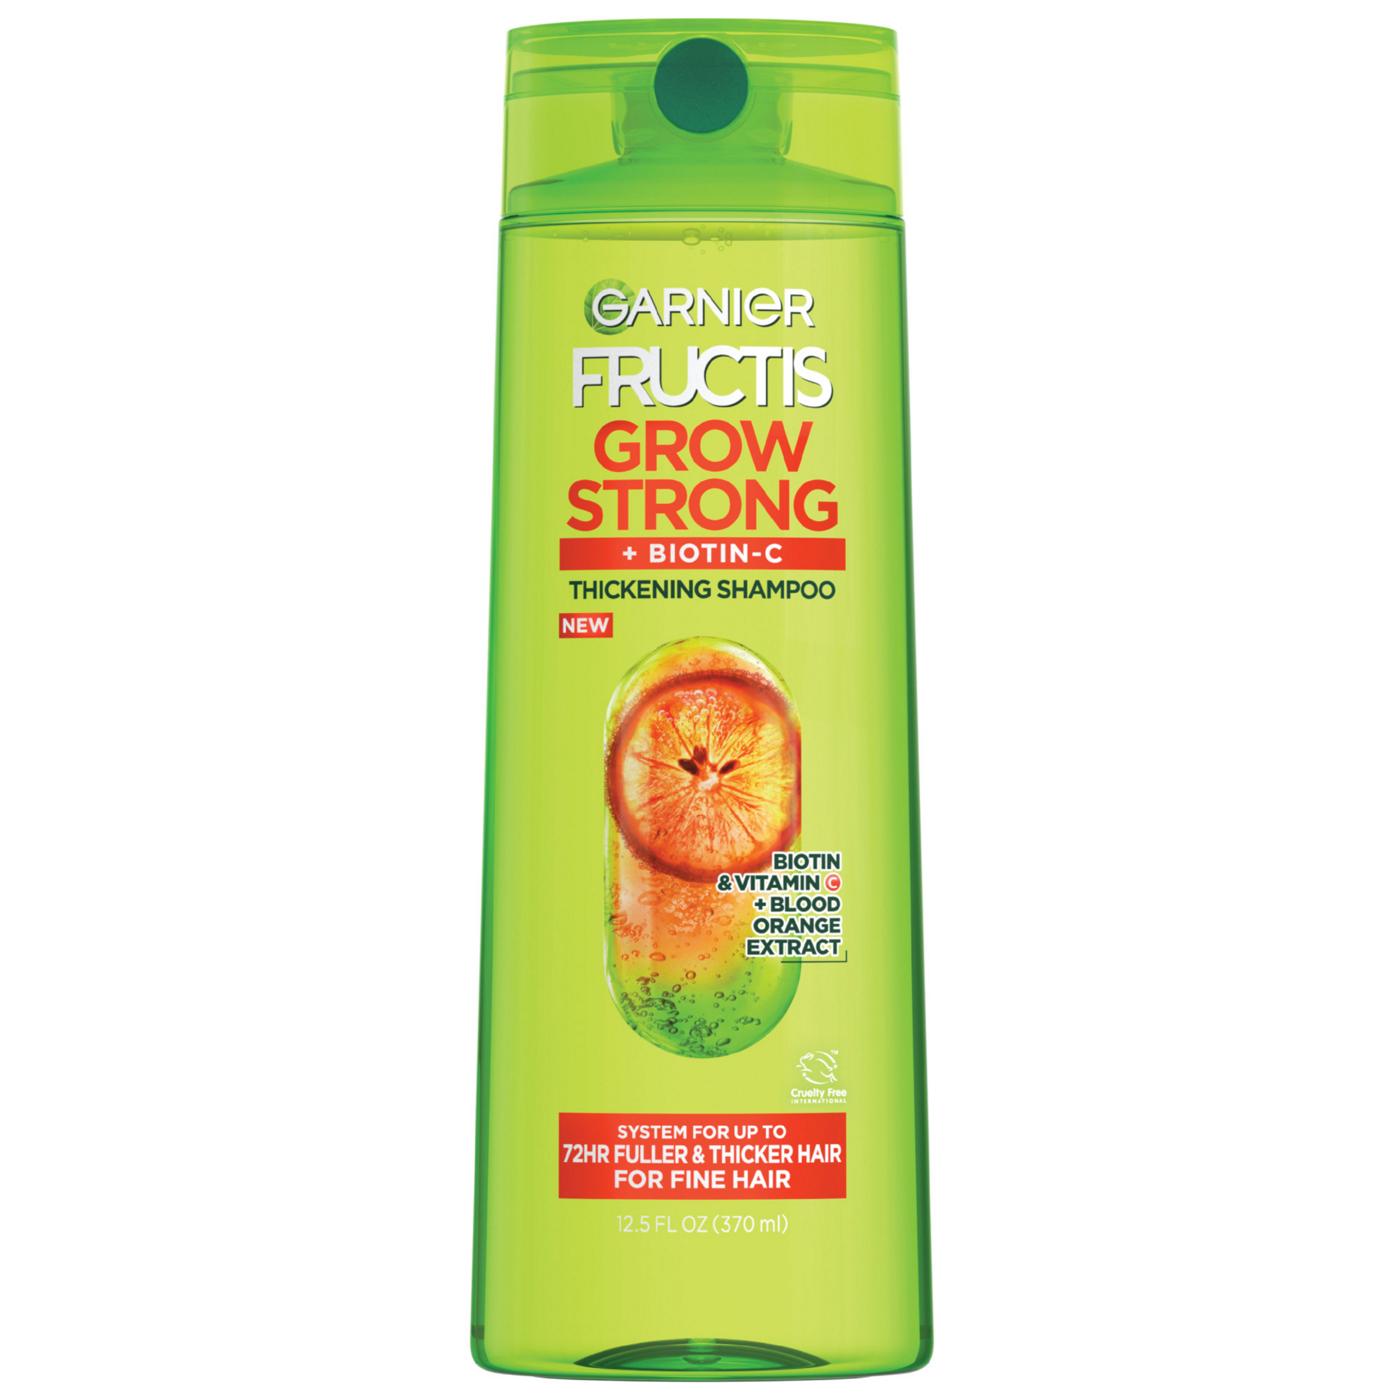 Garnier Fructis Grow Strong Thickening Shampoo; image 1 of 6